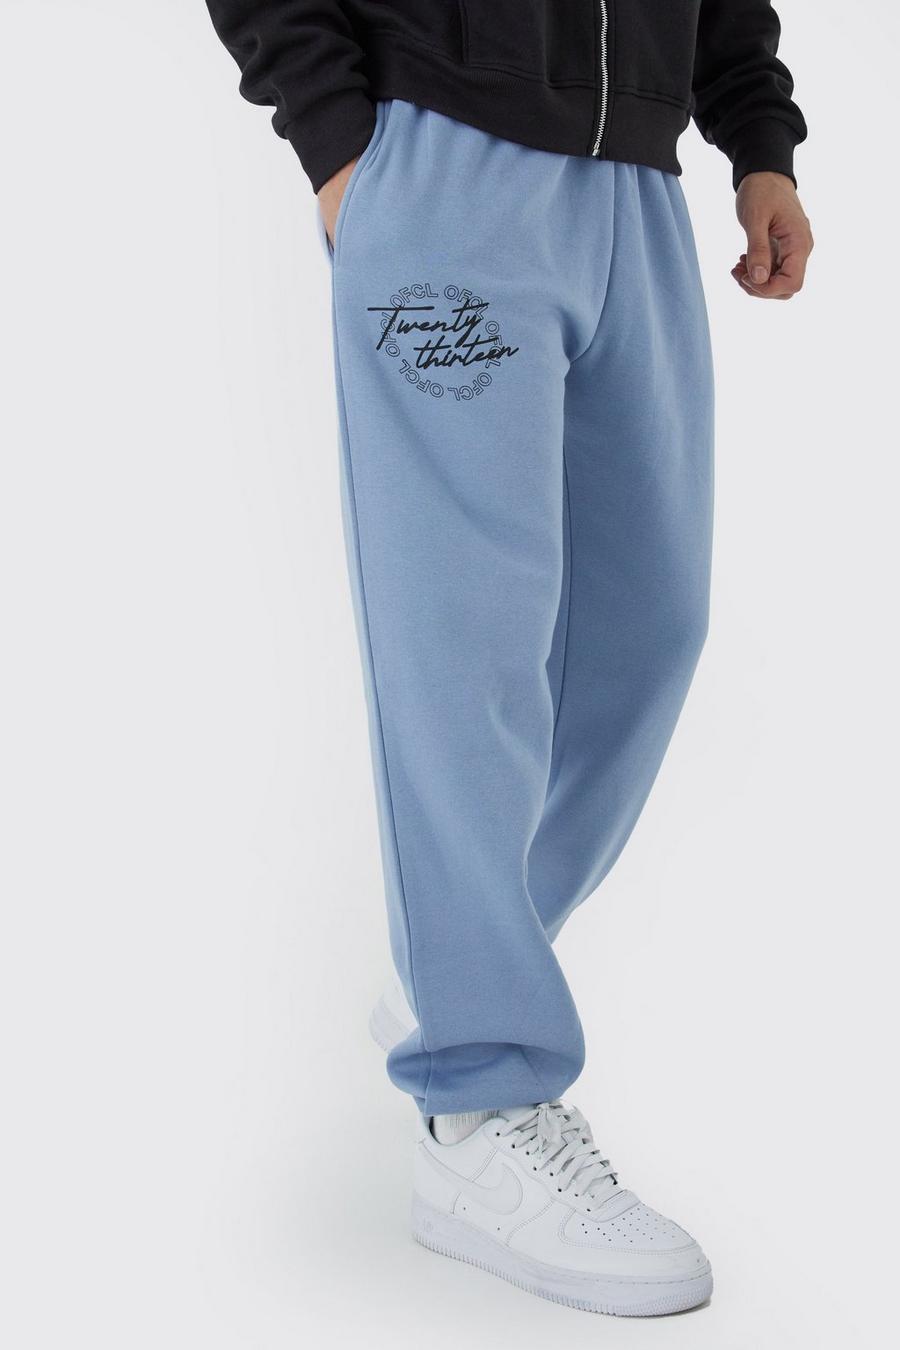 Pantalón deportivo Tall con estampado gráfico Ofcl, Dusty blue